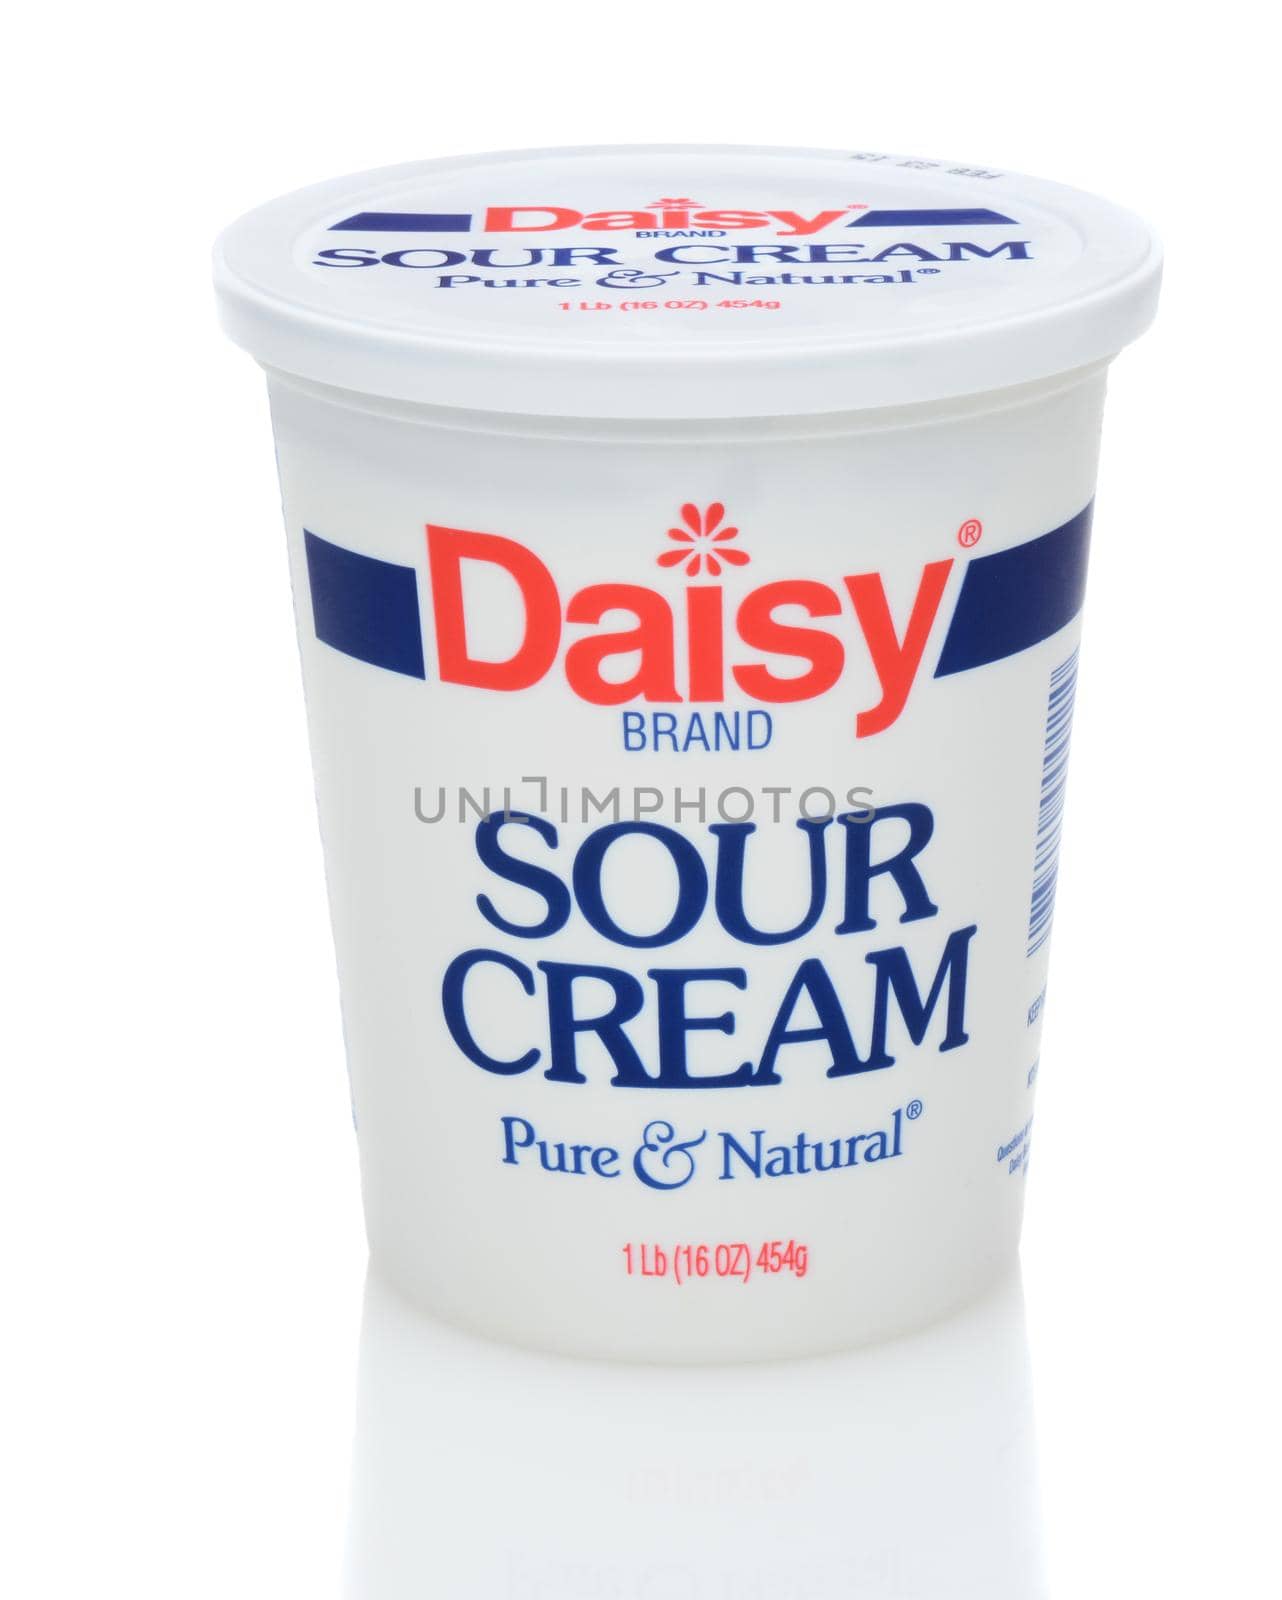 Daisy Brand Sour Cream by sCukrov